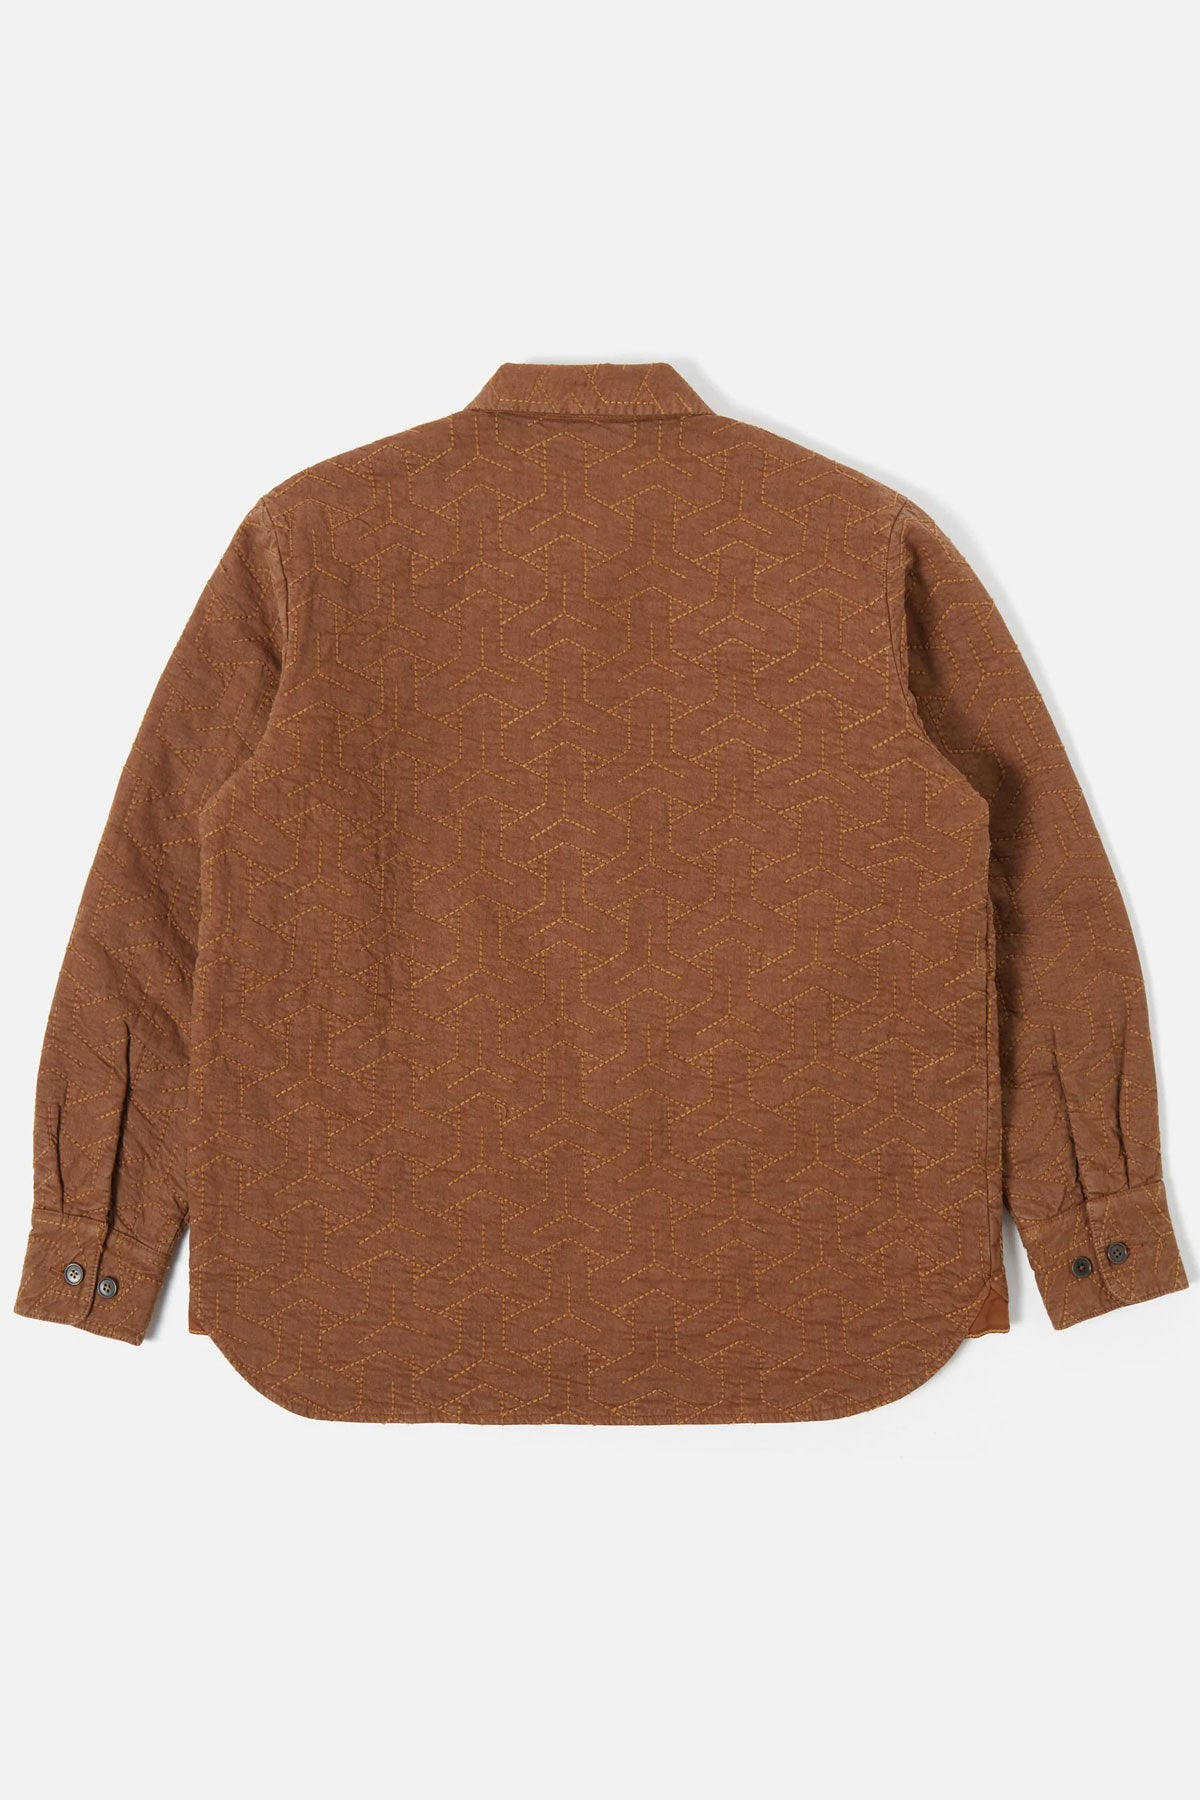 Universal Works - Travail Quilt Shirt Jacket In Brown Marl Twill